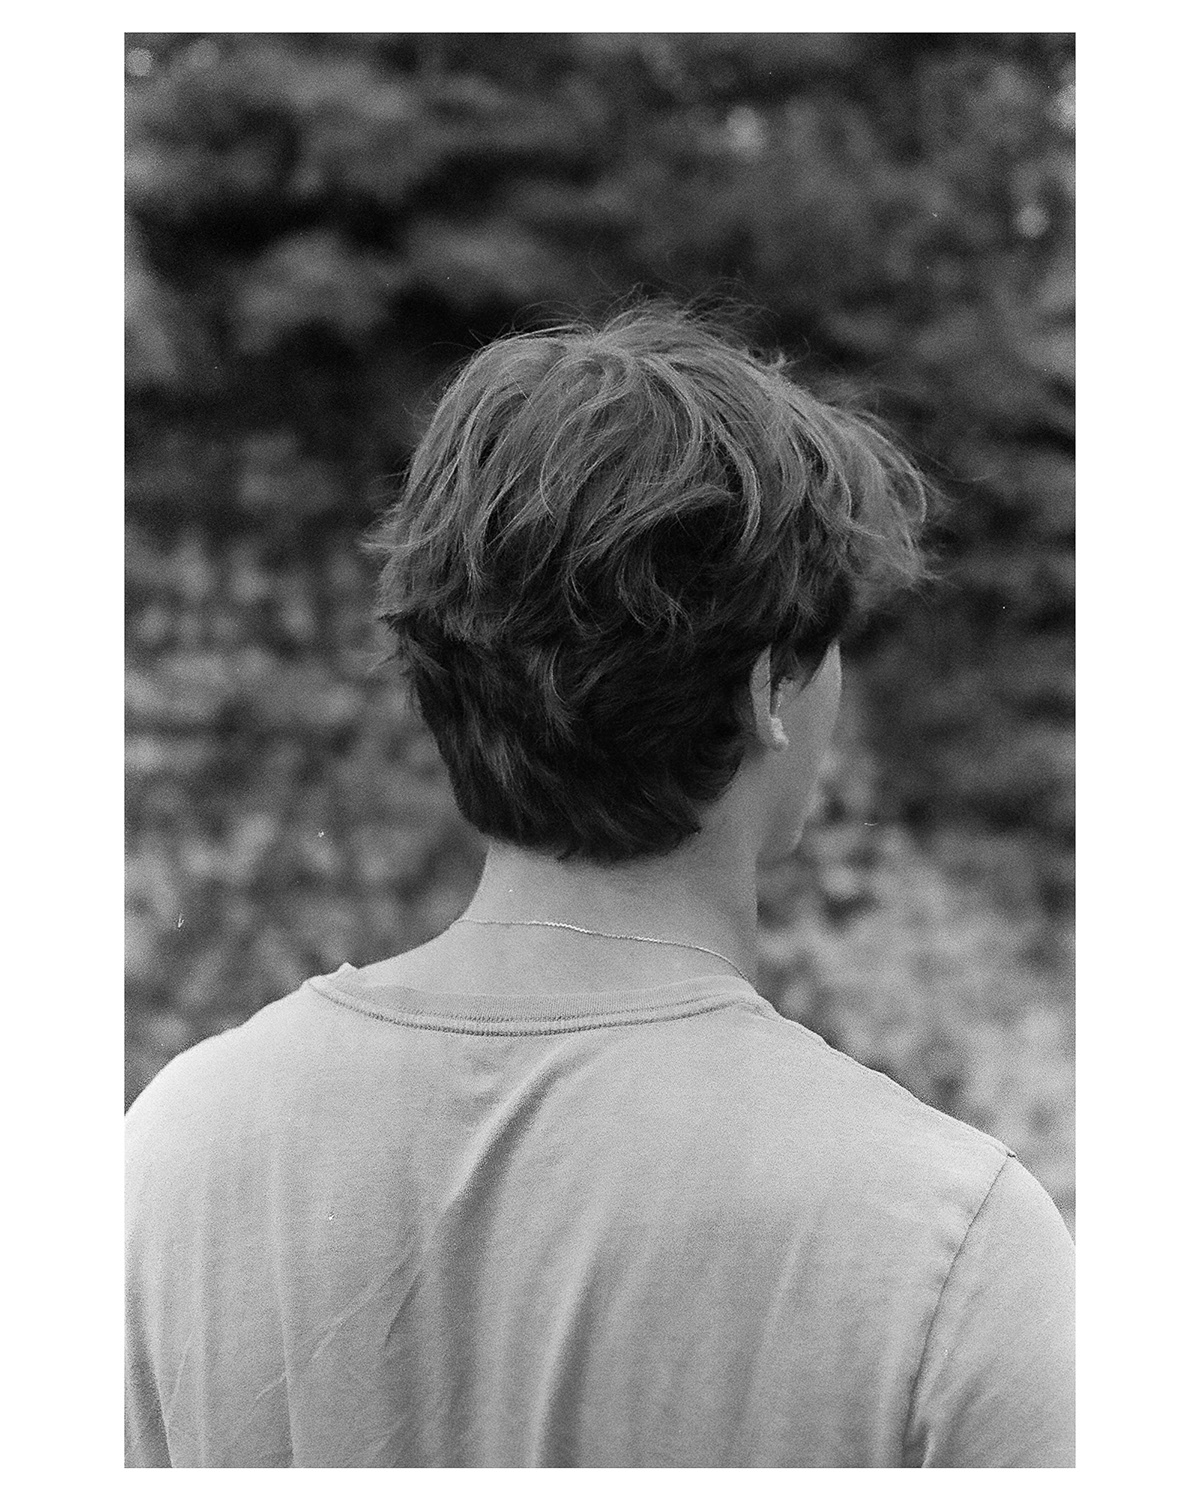 35mm blackandwhite Film   intimacy portrait Portraiture boy Directlight summer youth